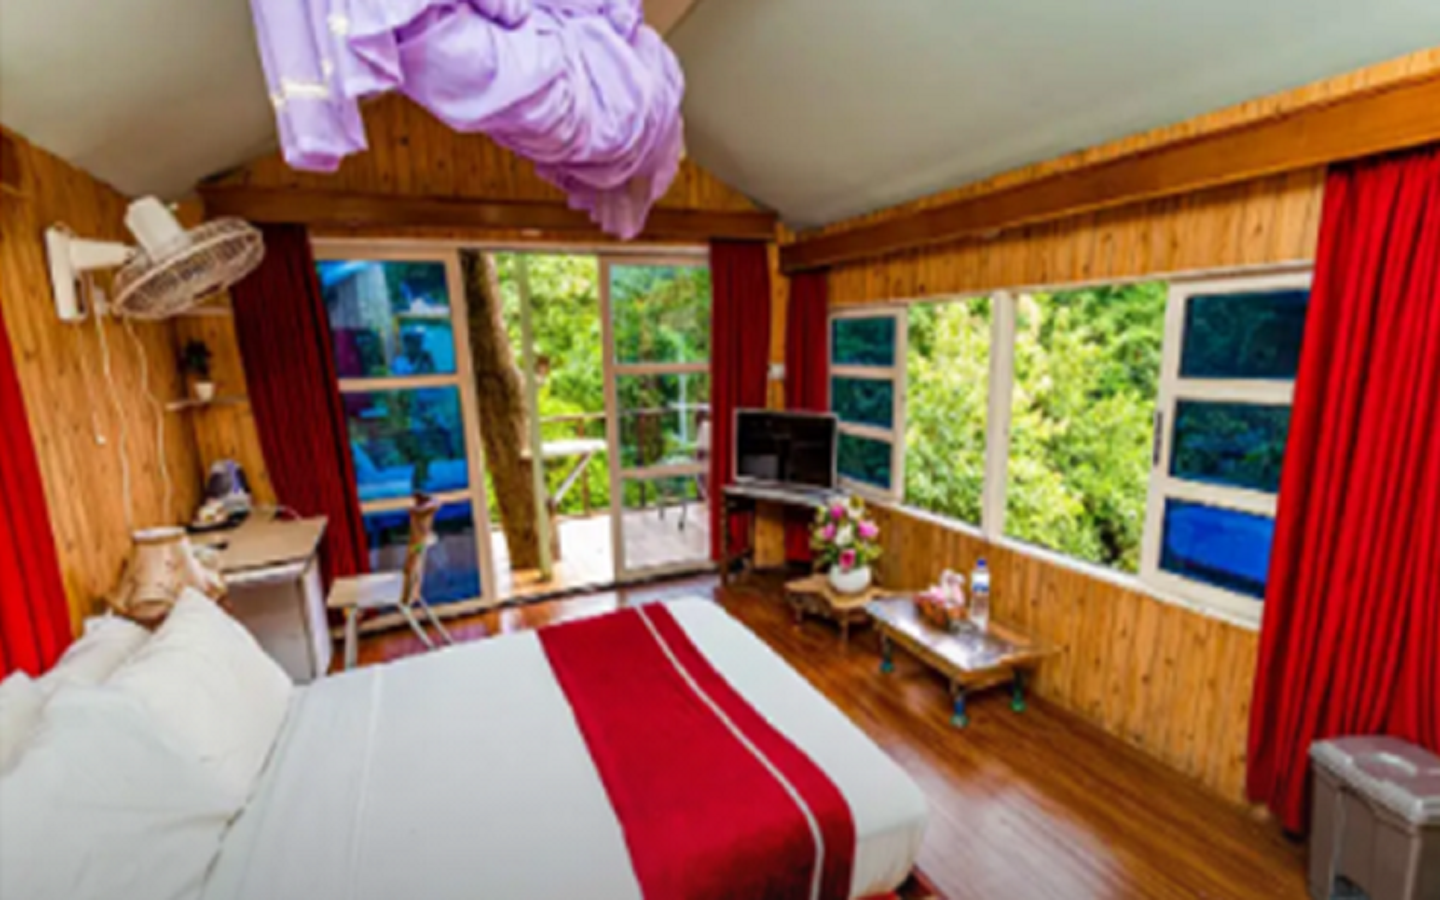 Room Tree House -1, Green Peak Resorts